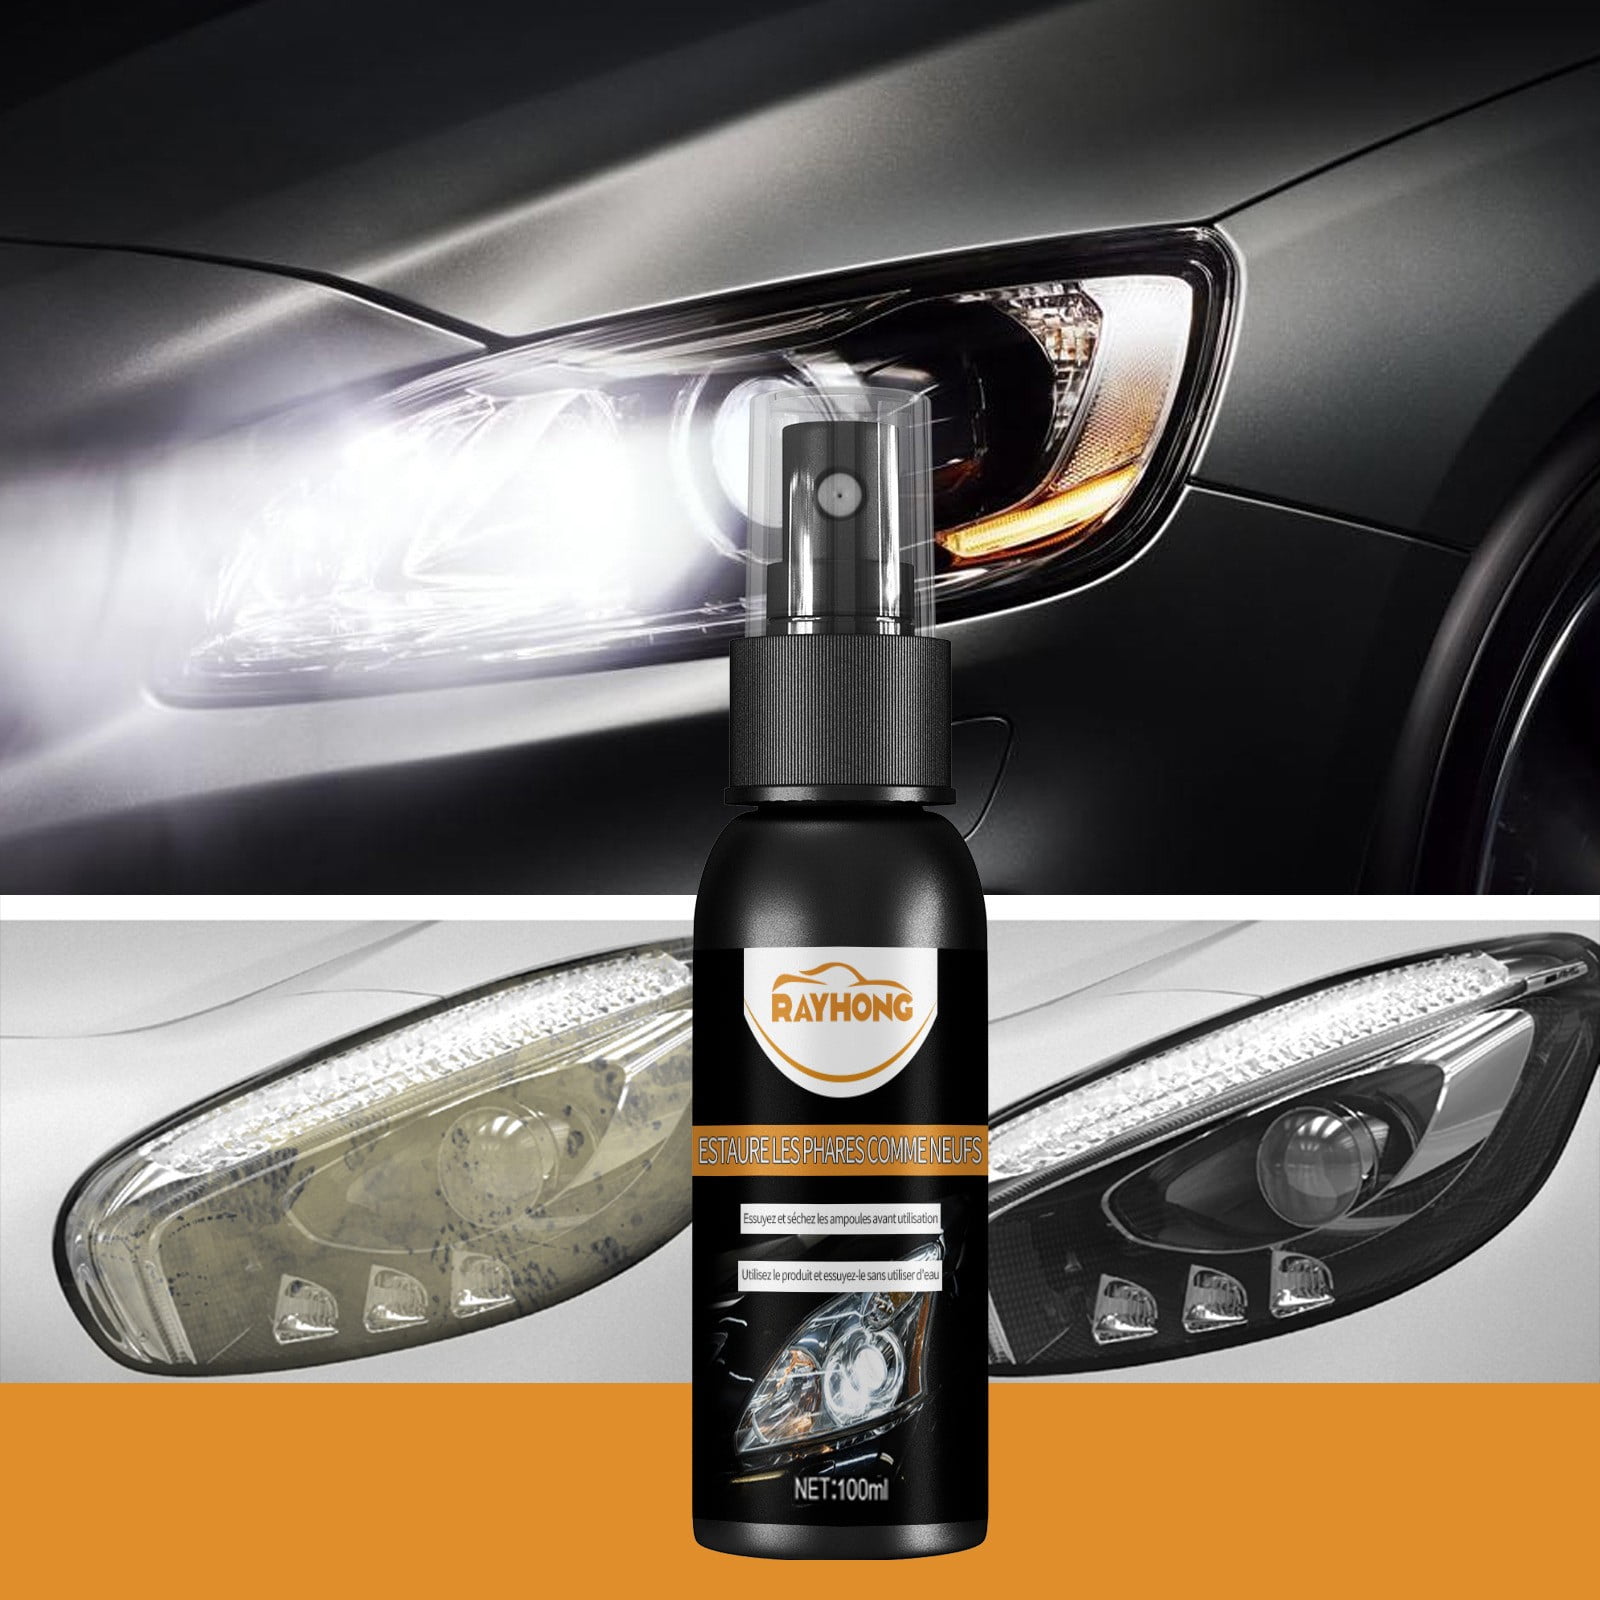 Car Headlight Restoration Kit Brightener Headlamp Scratch Repair Liquid  Paste Light Lens Polisher Cleaning Paste Refurbish Tool - AliExpress